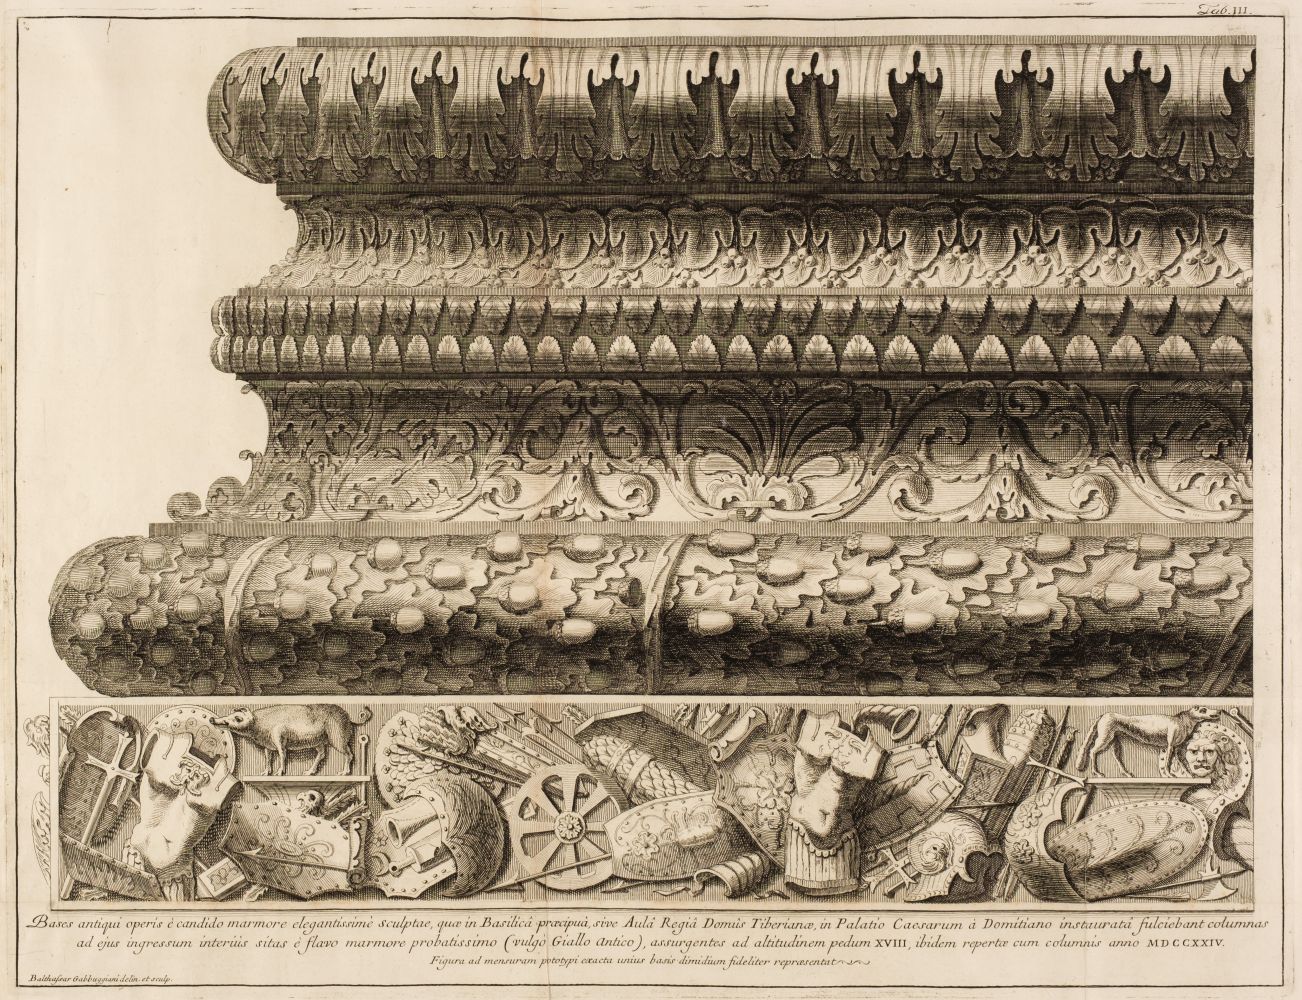 Gabbuggiani (Balthasar). Bases antiqui operis e candido marmore elegantissime..., 1724